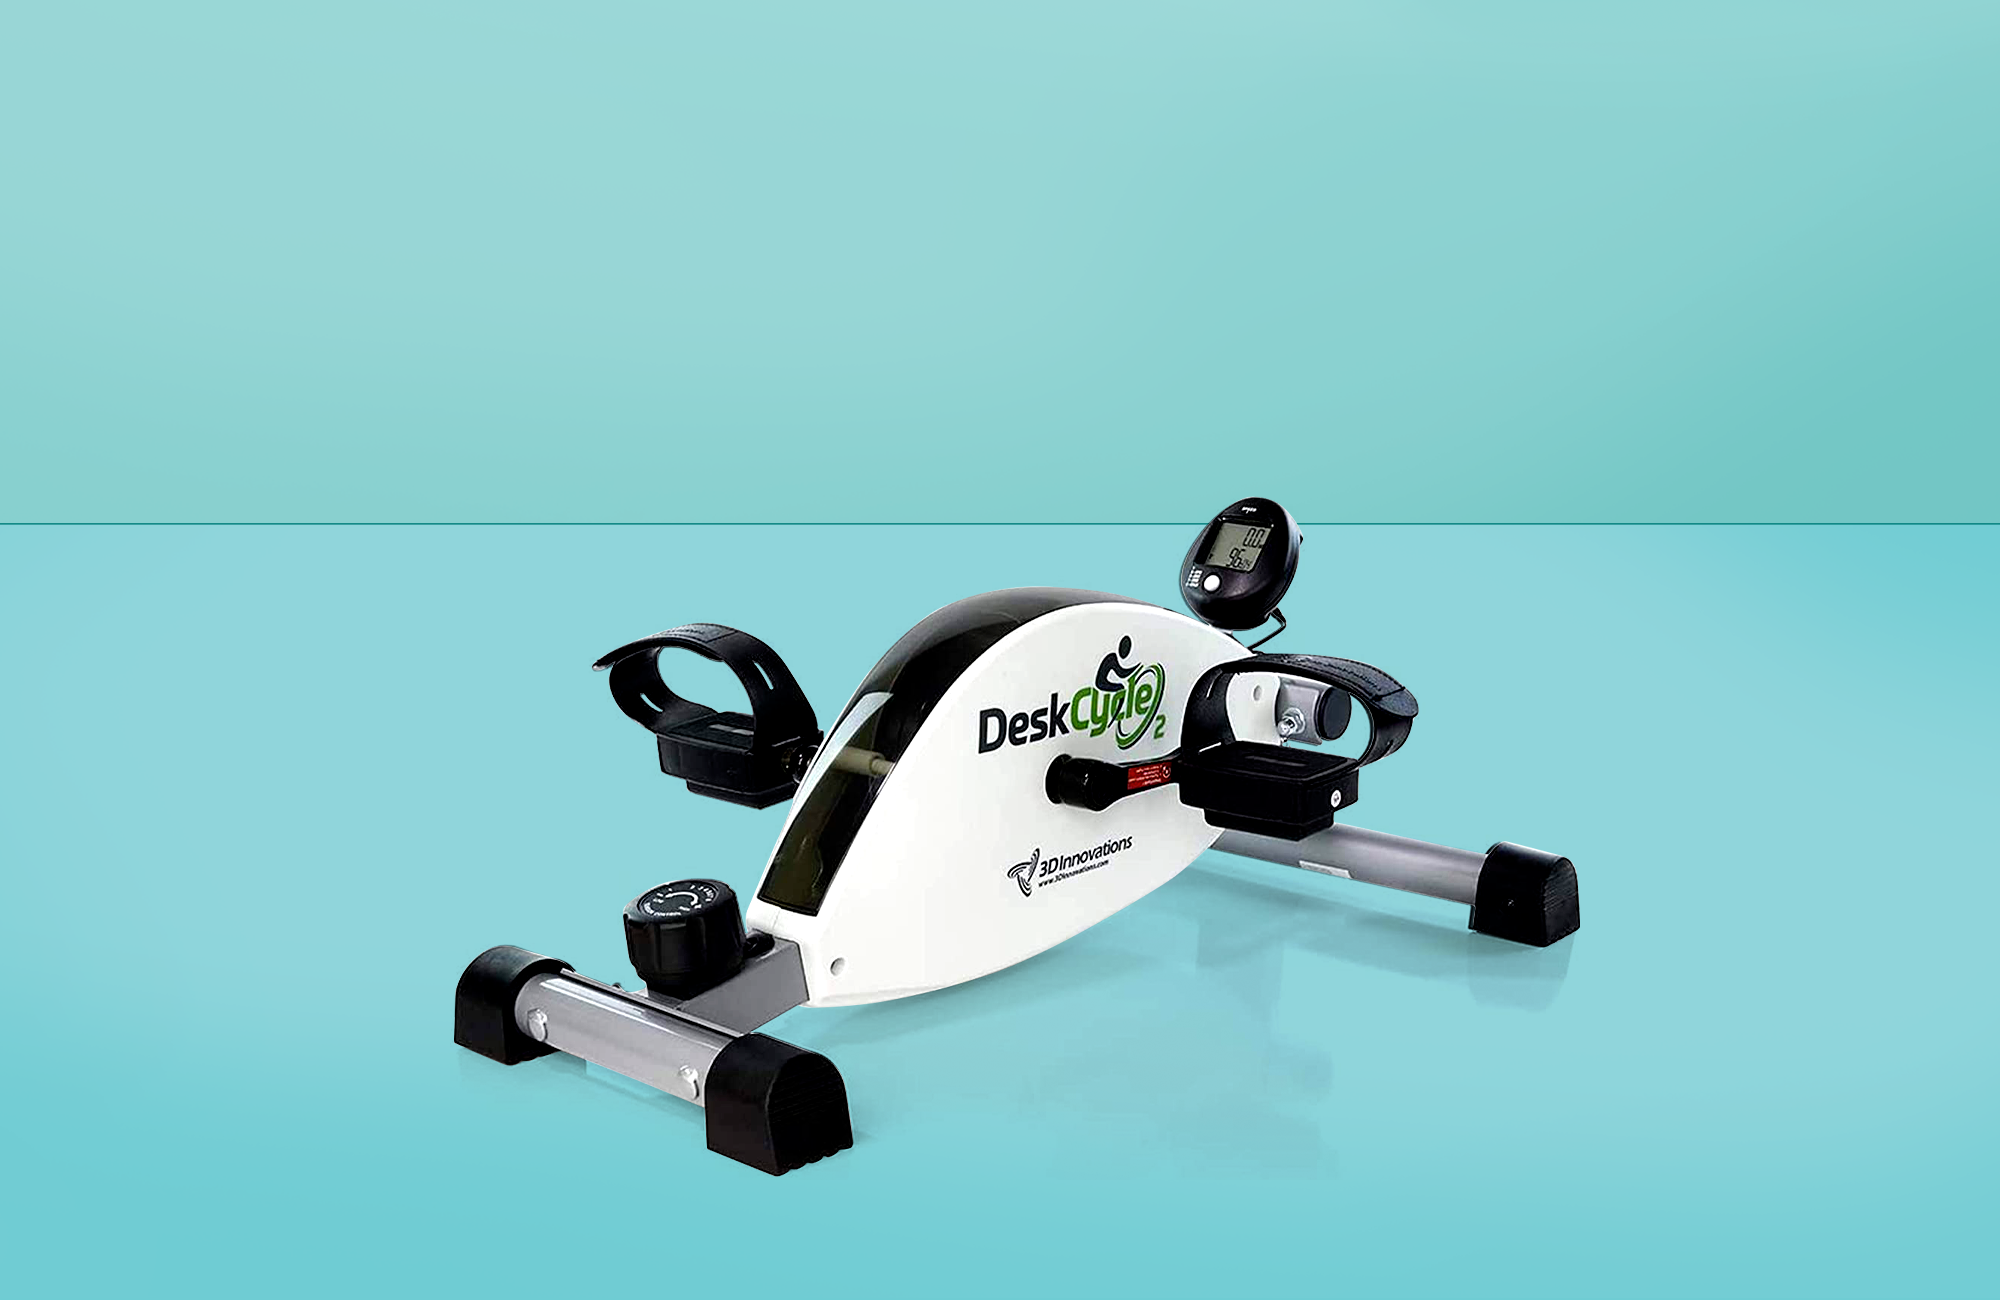 DeskCycle 2 Under Desk Bike Pedal Exerciser with Adjustable Leg - Mini  Exercise Bike Desk Cycle, Leg Exerciser for Physical Therapy & Desk Exercise